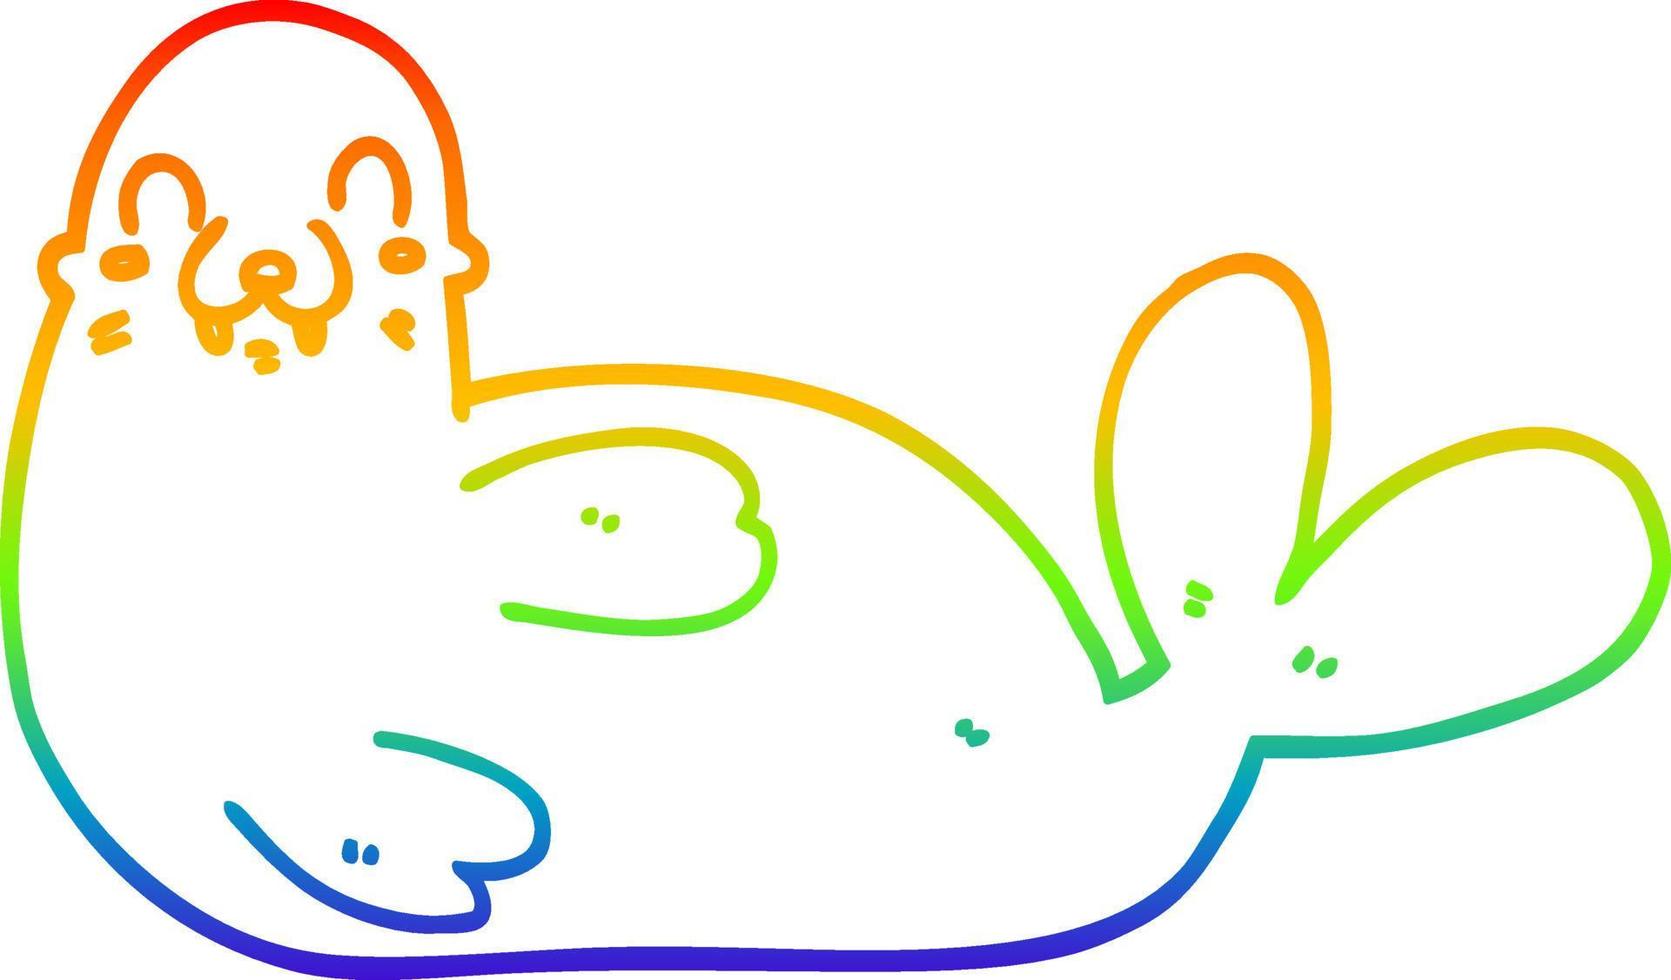 sello de dibujos animados de dibujo de línea de gradiente de arco iris vector